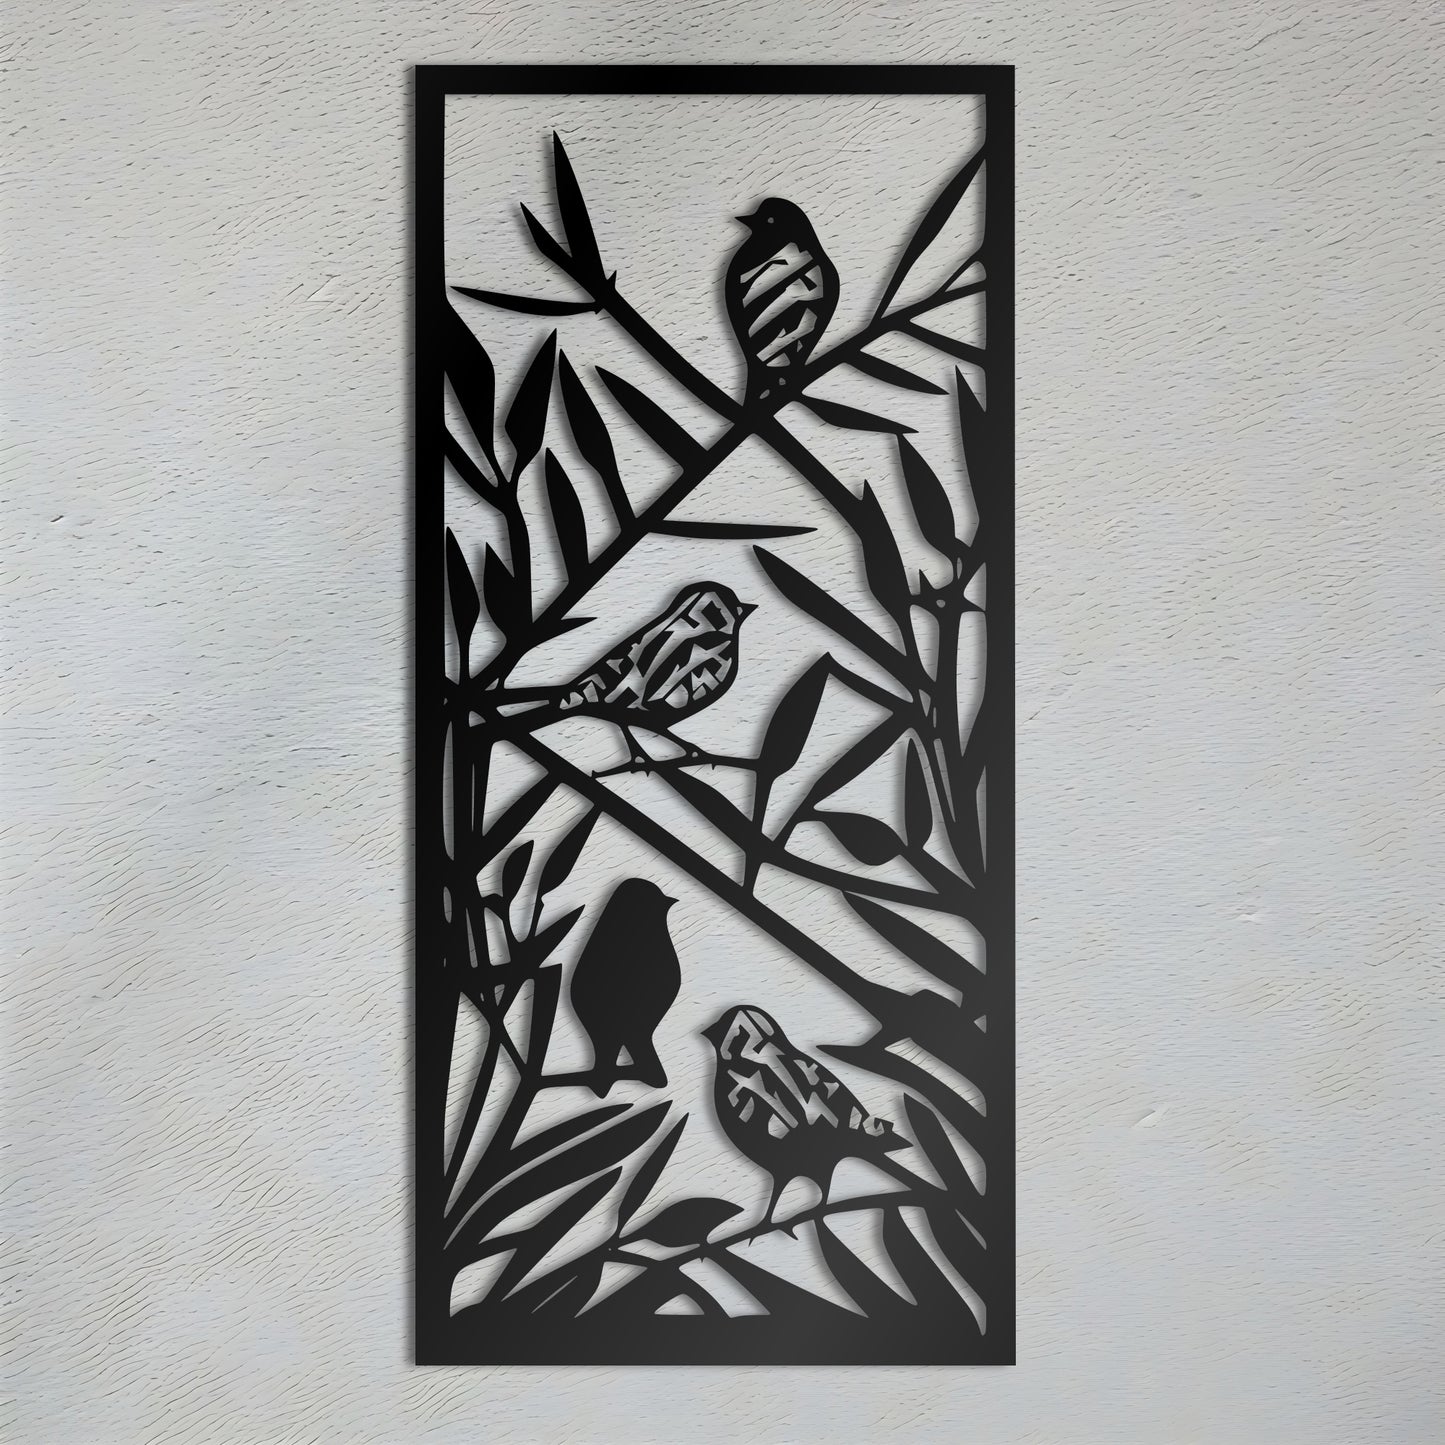 Tribal Bamboo Birds on Tree Branch Metal Wall Art